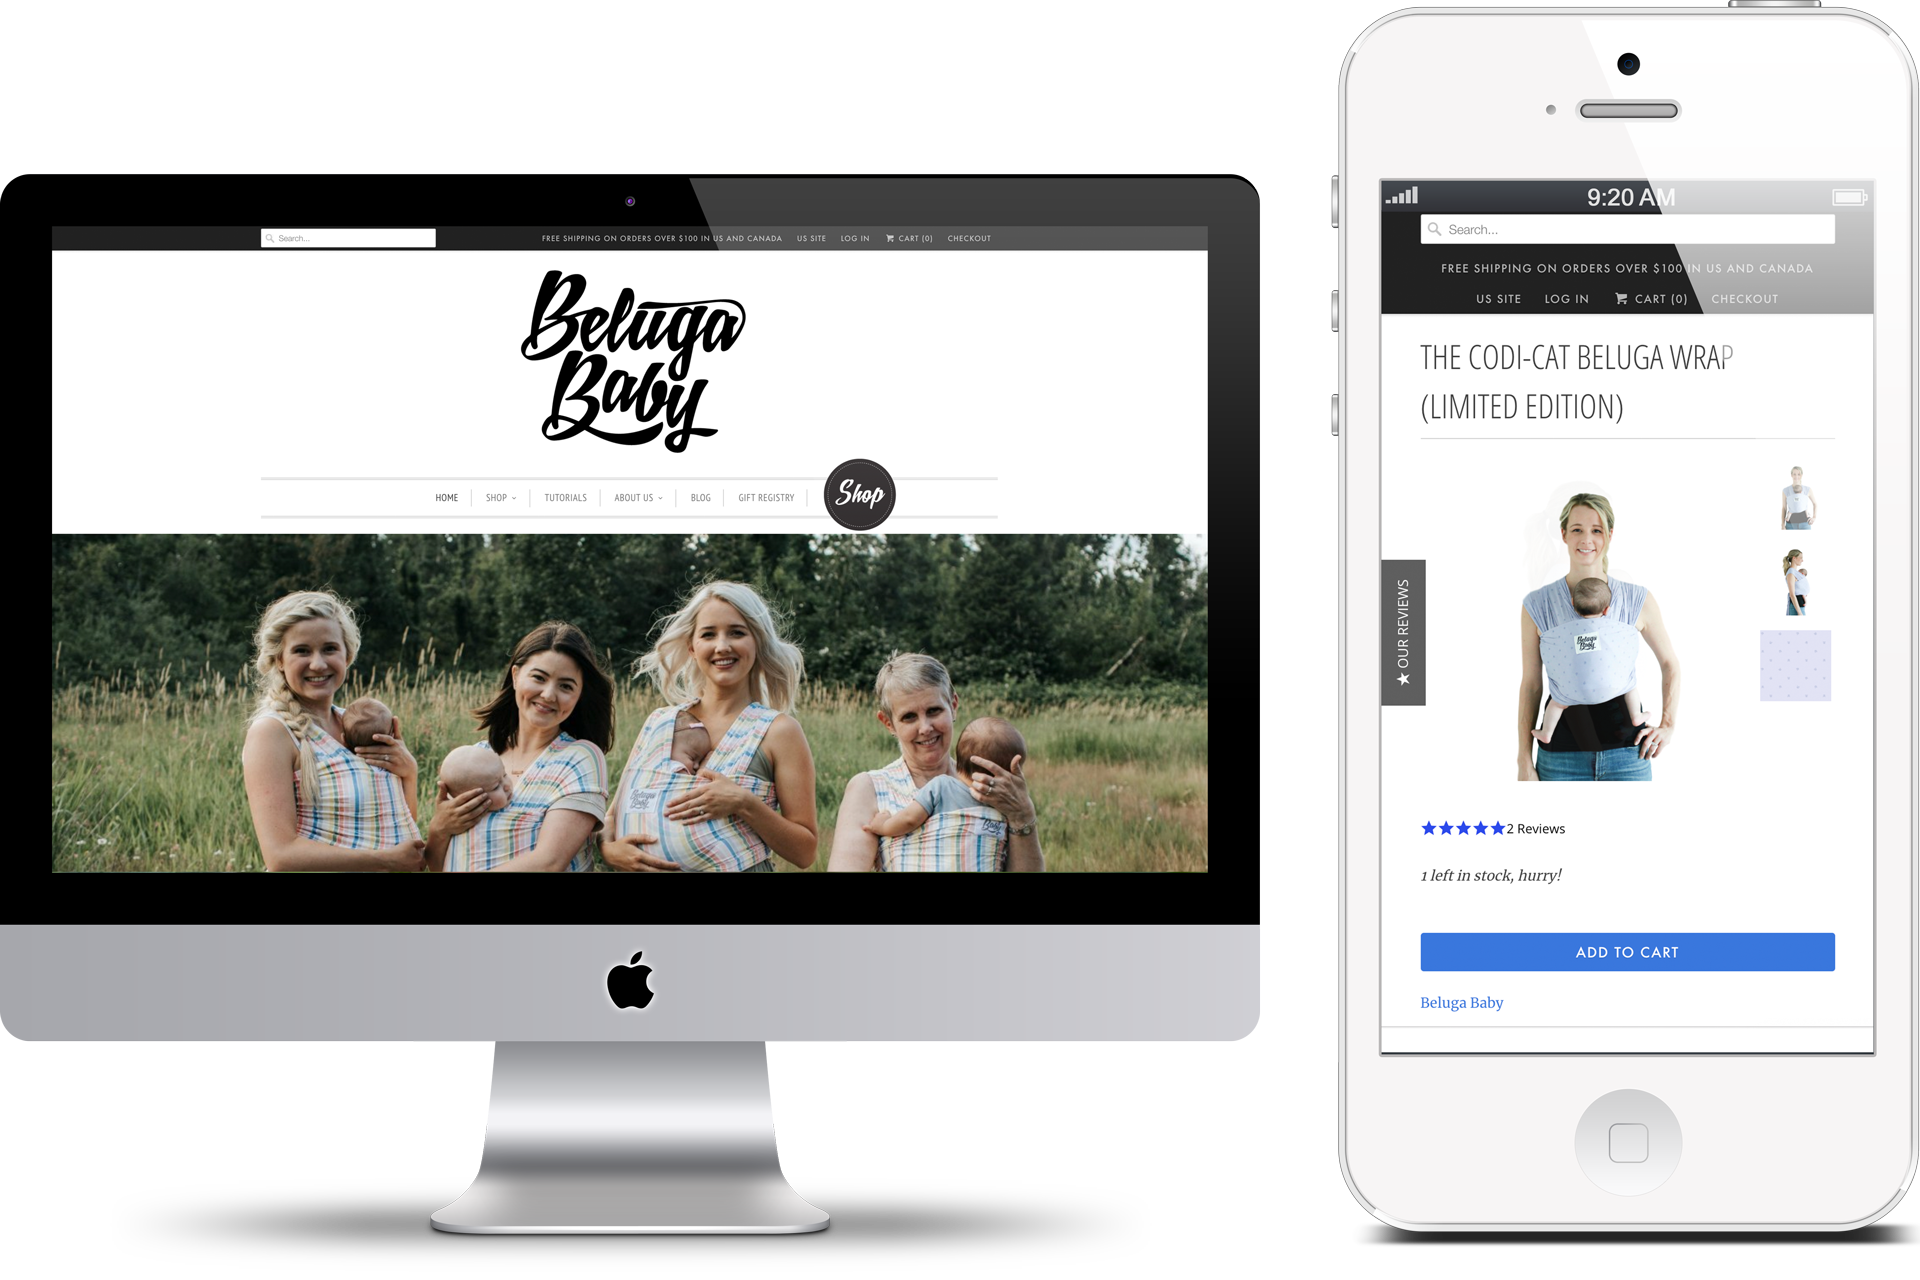 Beluga Baby Digital Marketing project in Scope Creative's Portfolio